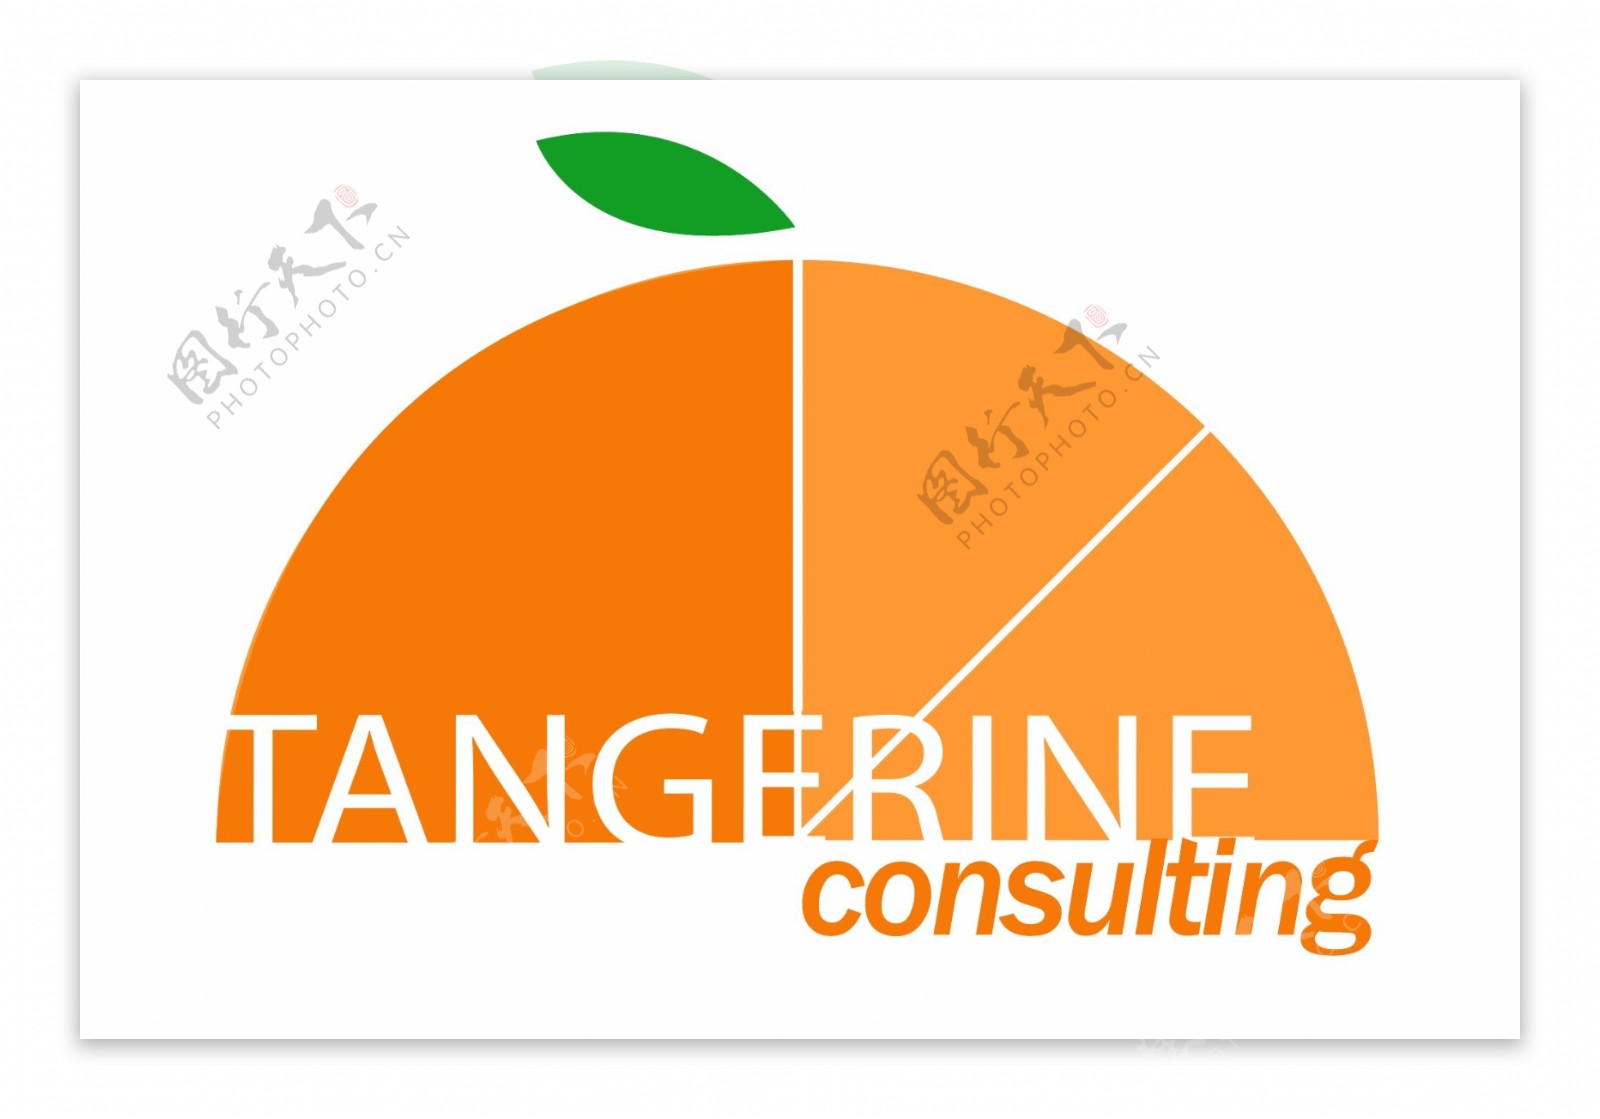 TangerineConsultinglogo设计欣赏TangerineConsulting服务公司LOGO下载标志设计欣赏